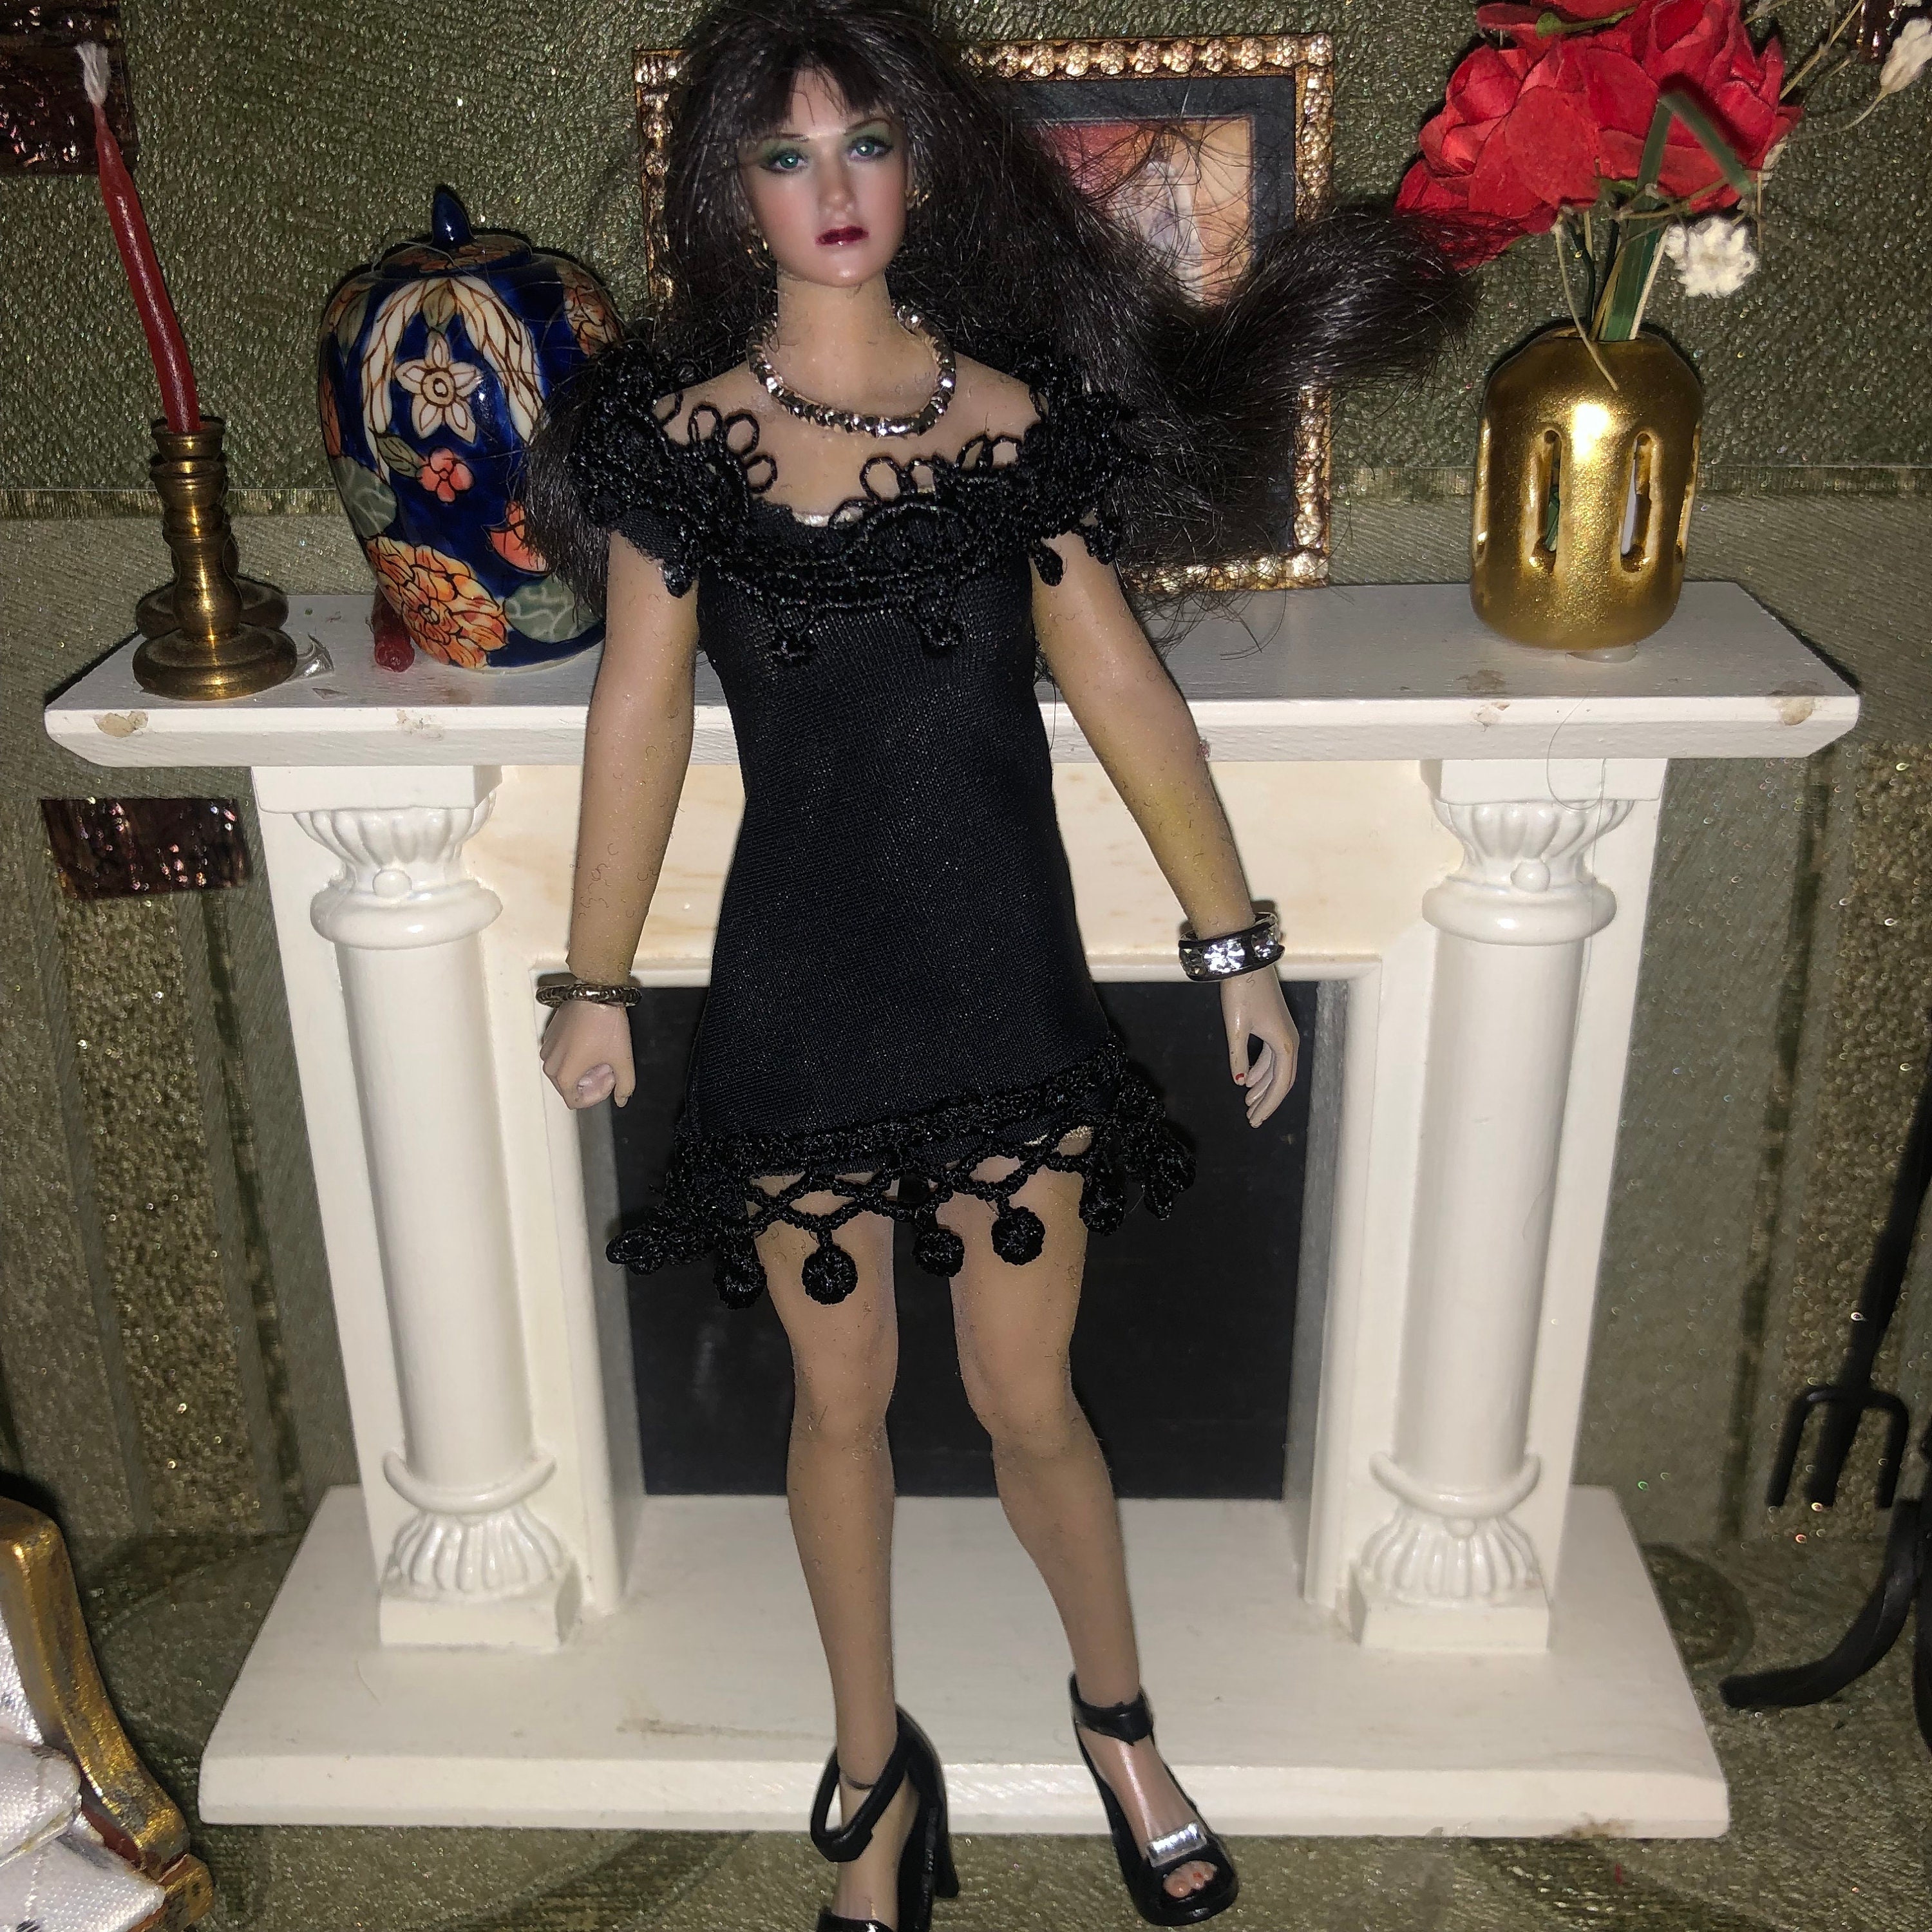 Roxanne's Dolls: Phicen Stainless Steel Skeleton Seamless Figures